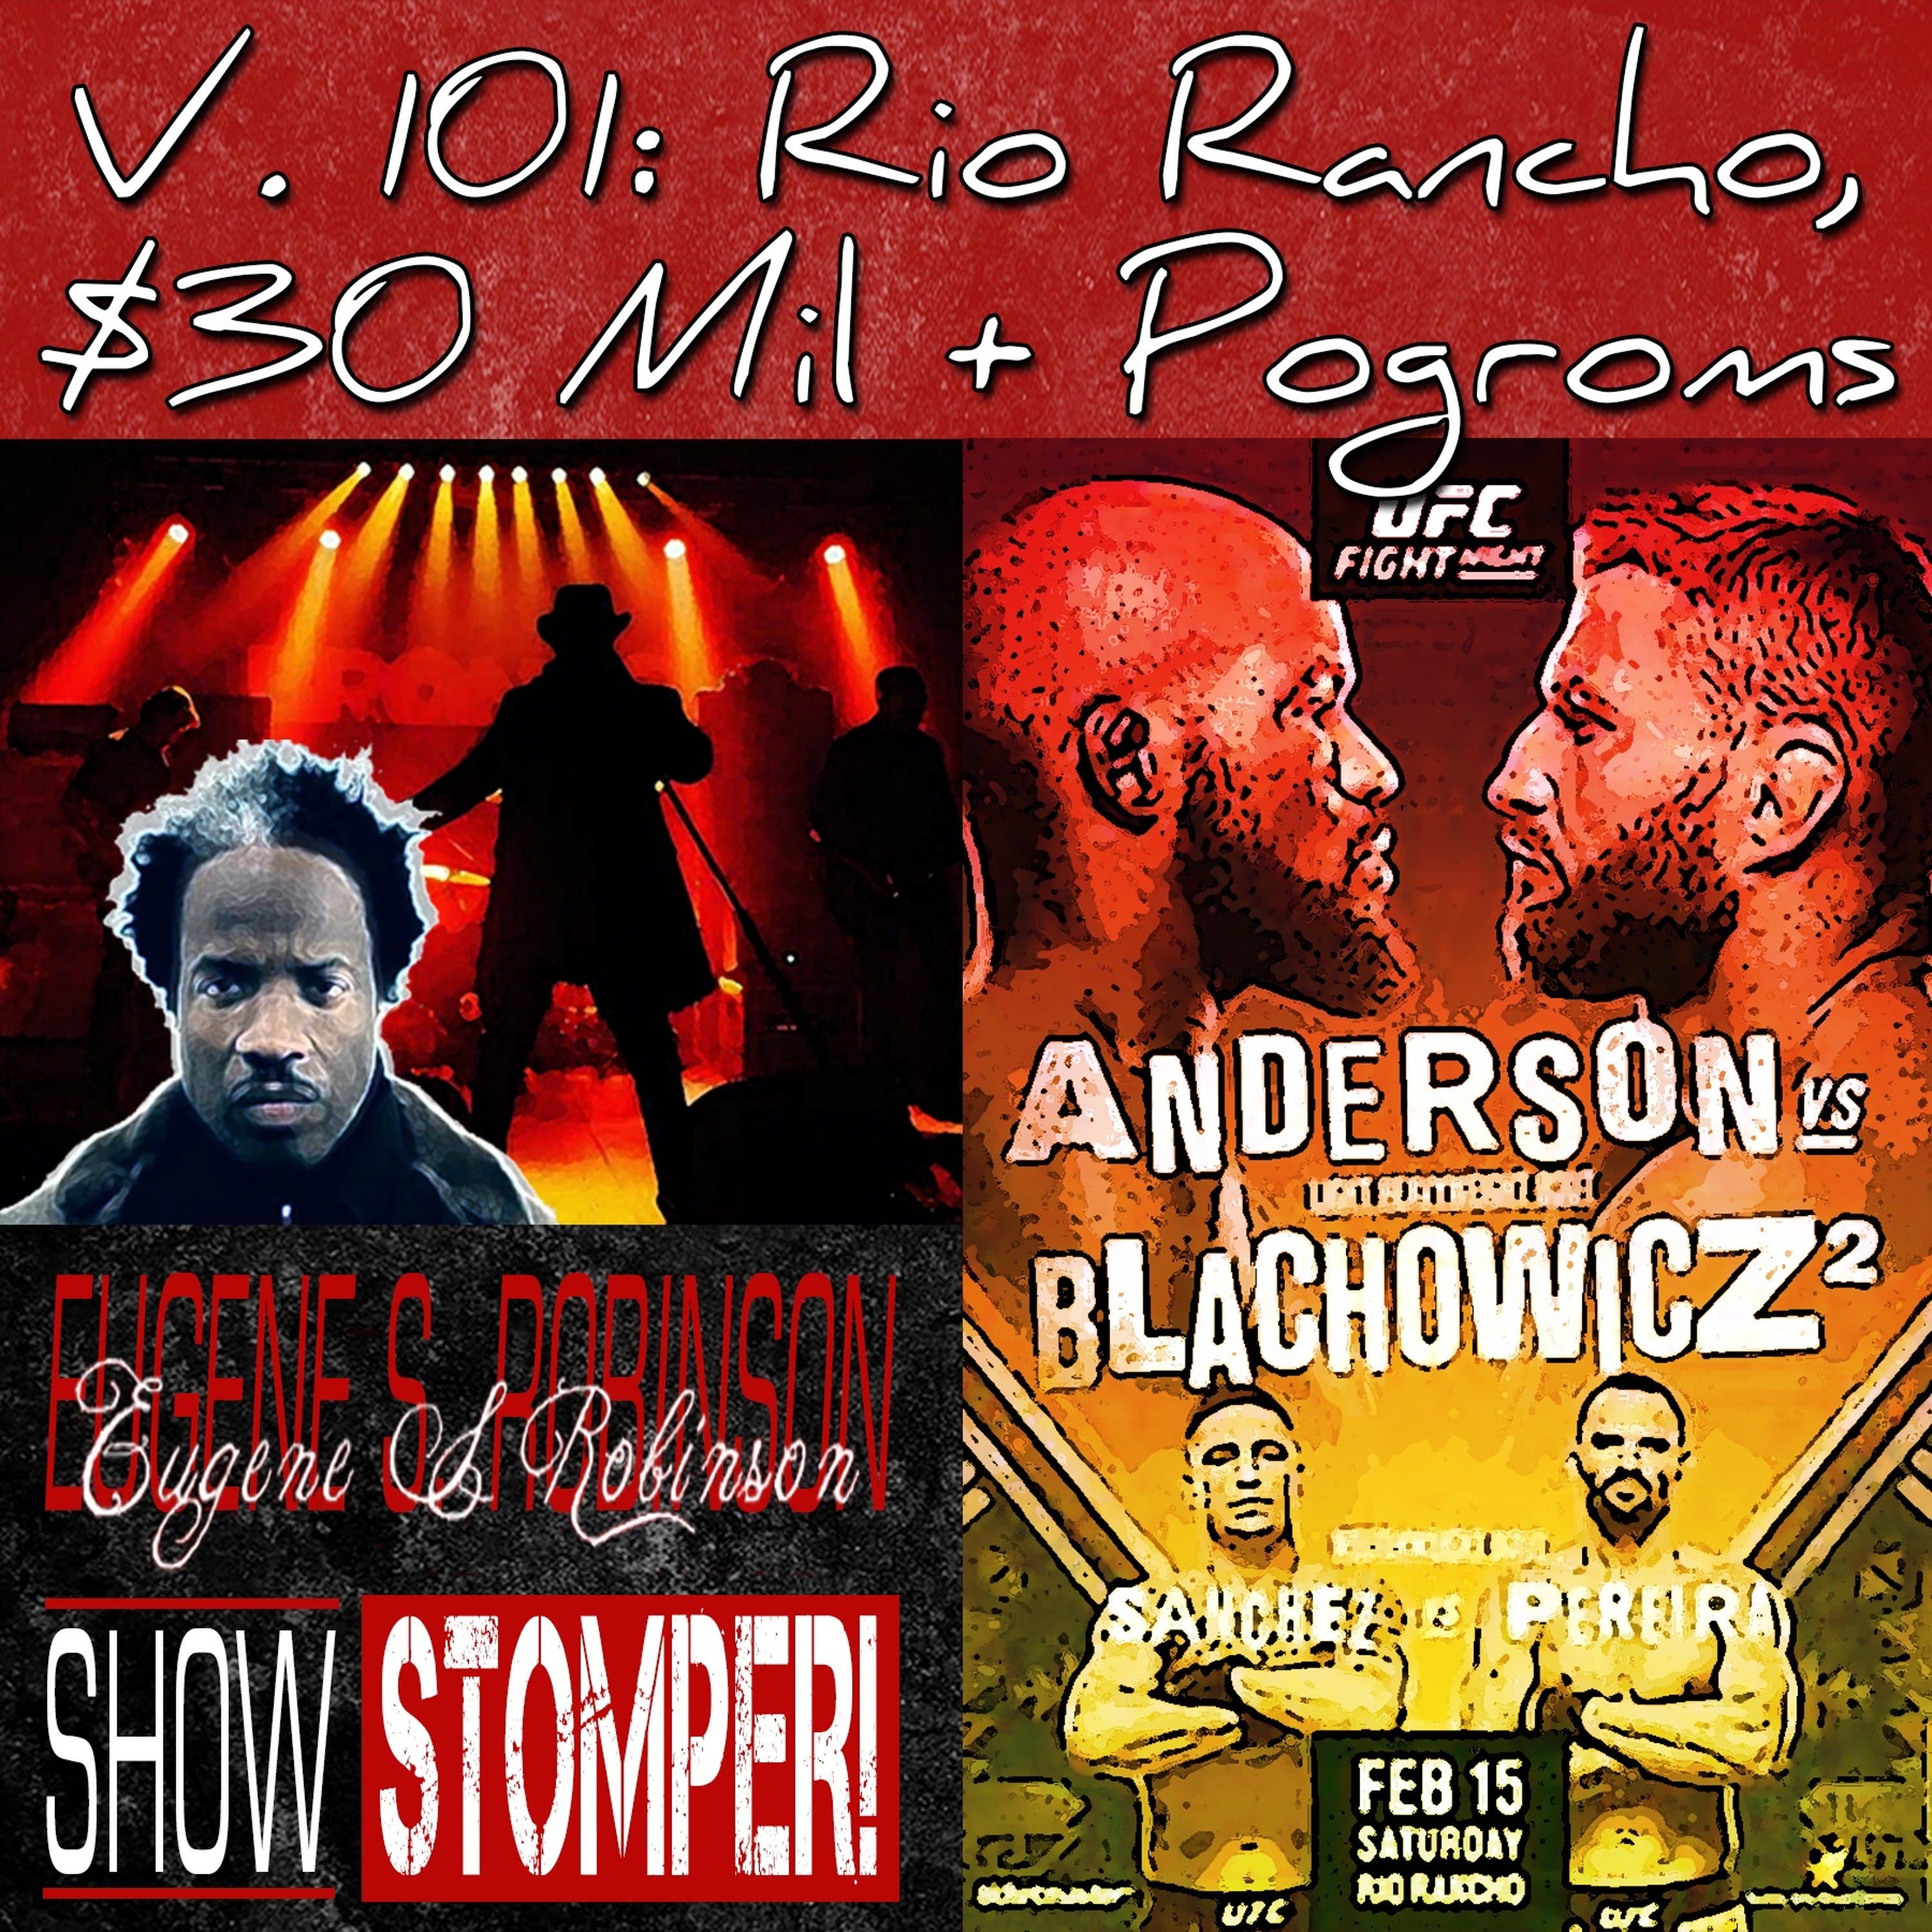 V. 101 Rio Rancho, $30 Mil + Pogroms All On The Eugene S. Robinson Show Stomper!